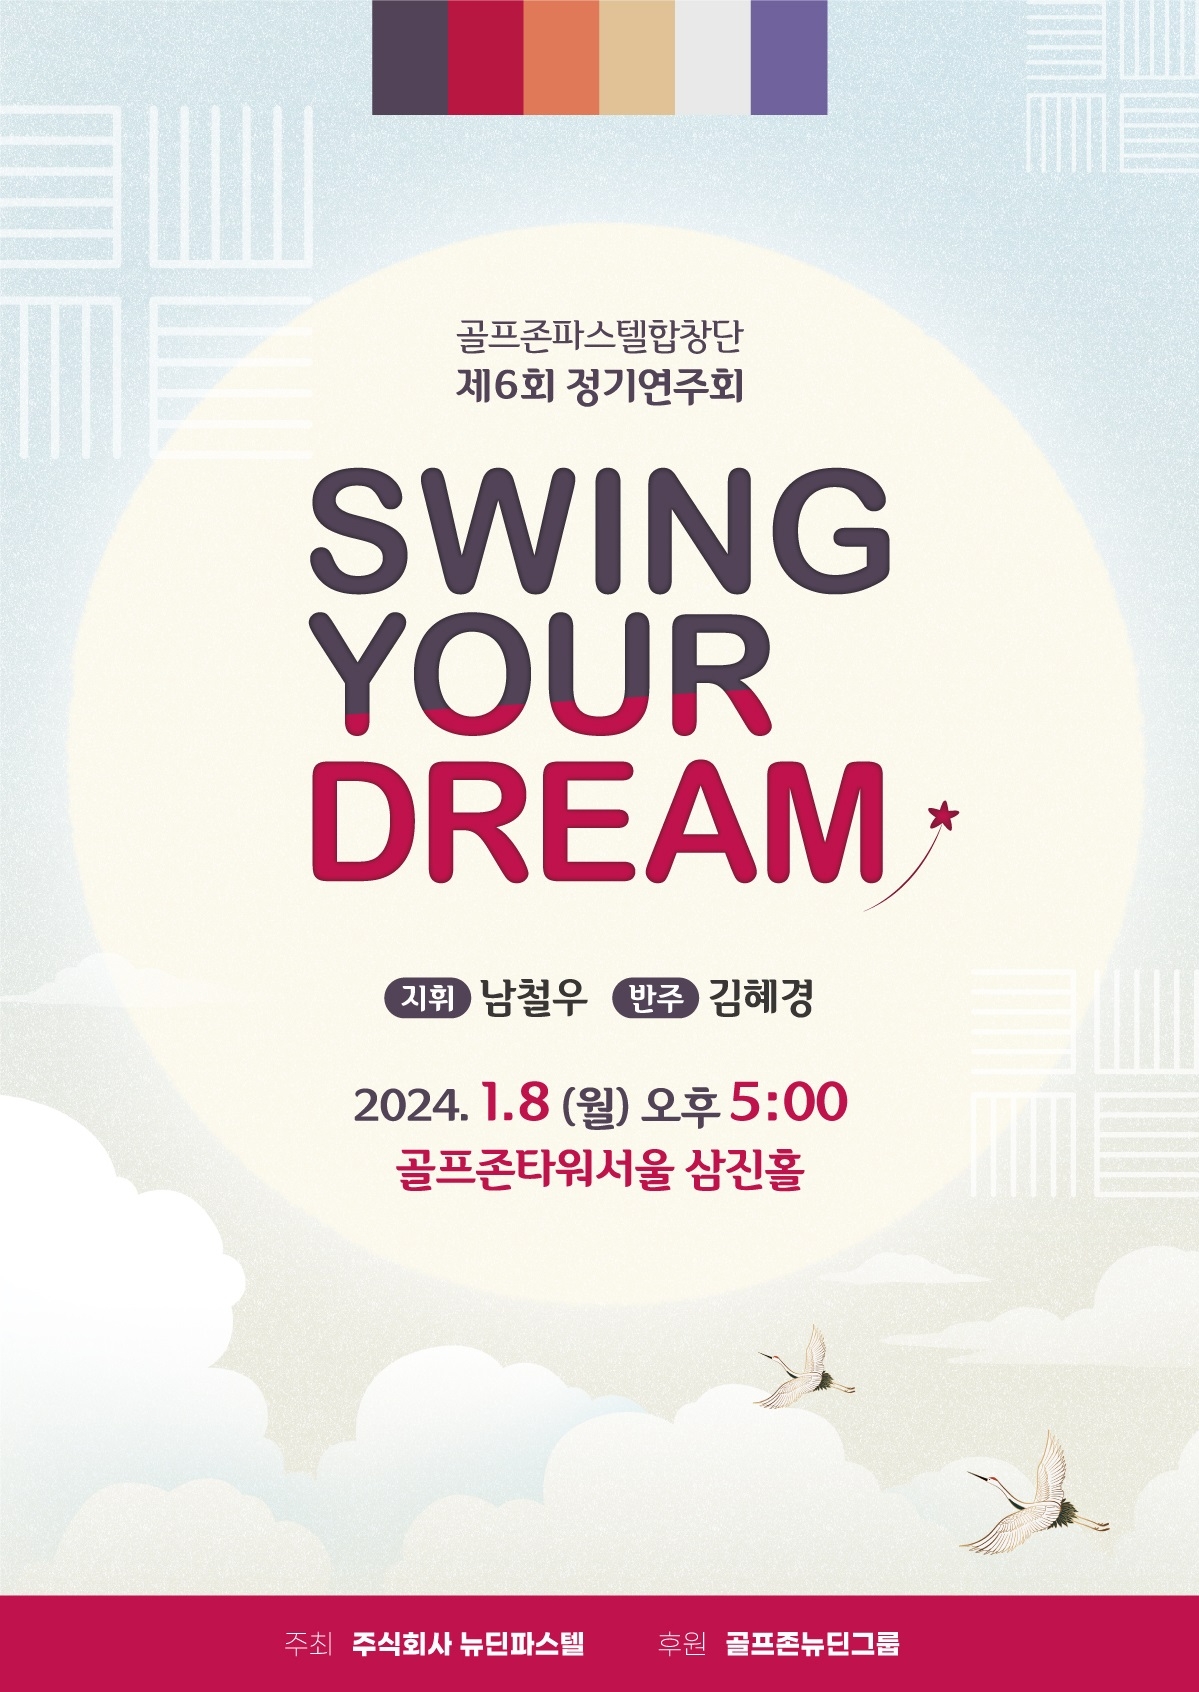 [IT이슈] 골프존파스텔합창단, 제6회 정기연주회 ‘Swing Your Dream’ 개최 外